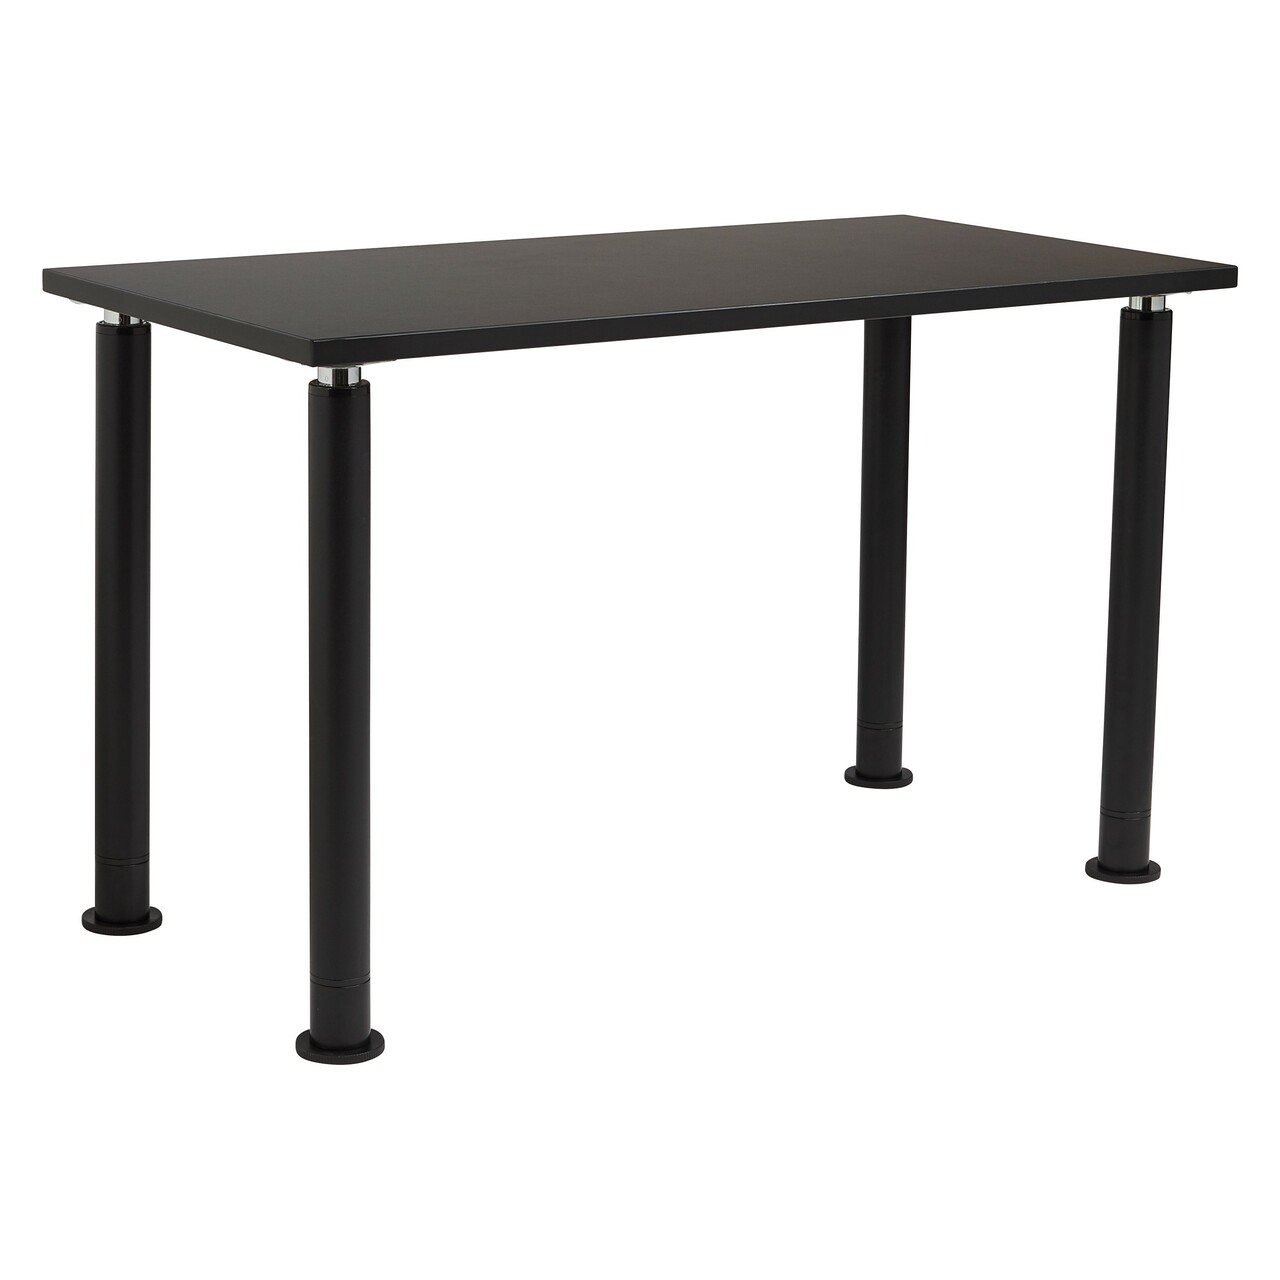 NPS Designer Science Table, 24"x54", Phenolic Top - Black Top and Black Leg